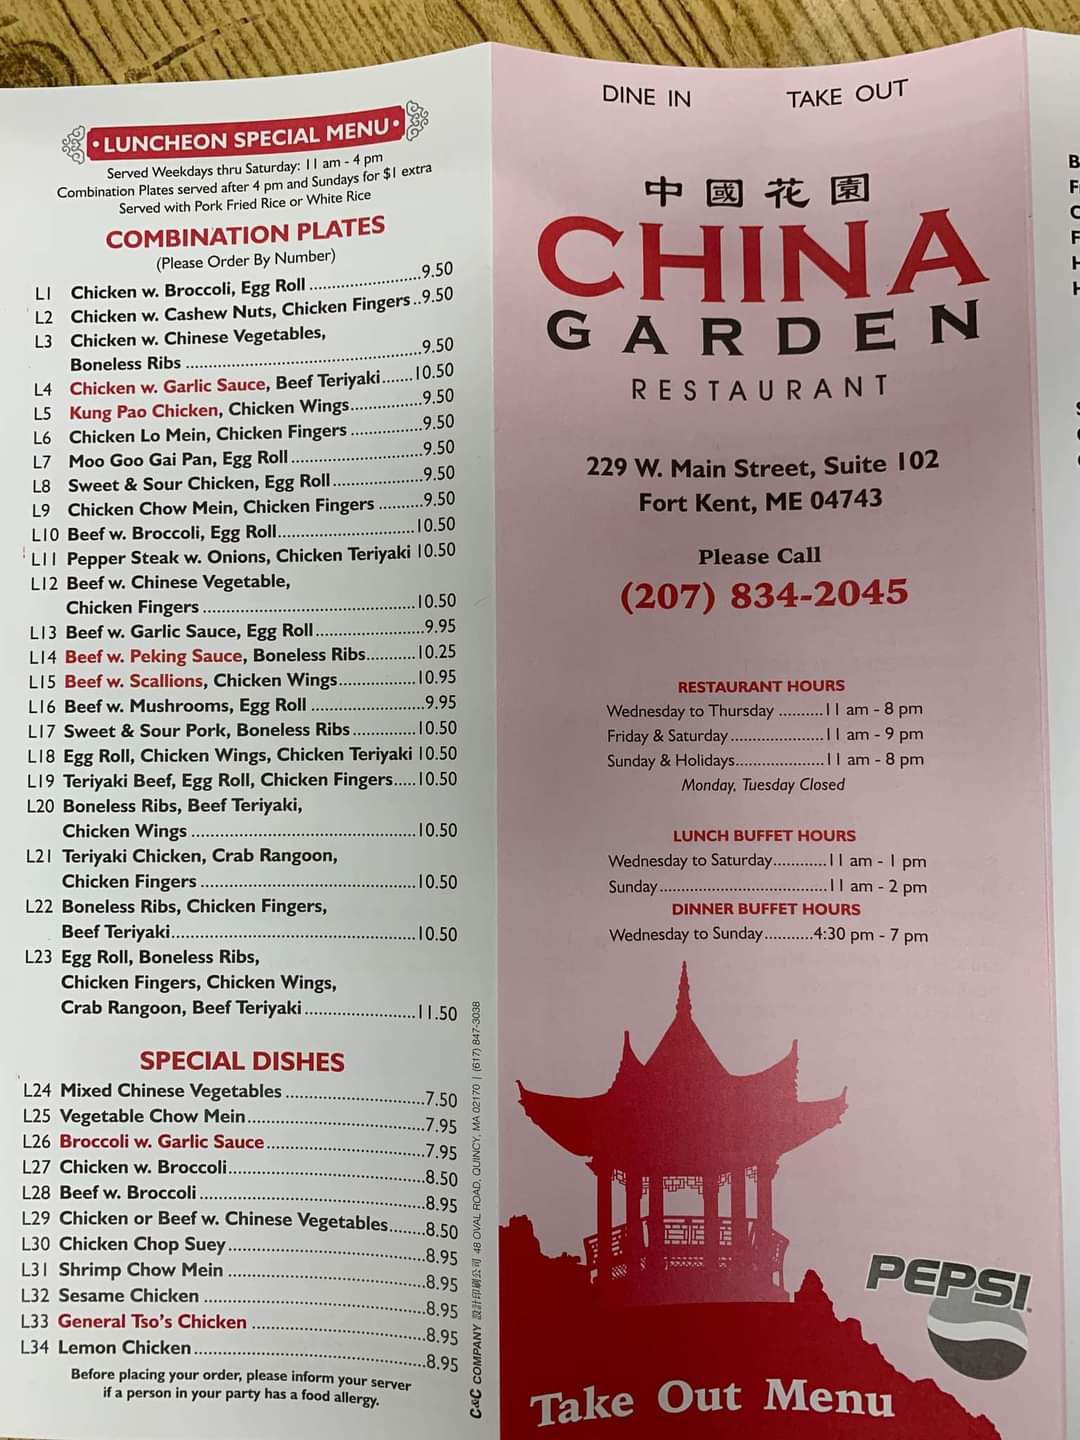 China Garden Restaurant Silver Wah Inc 229 W Main St Ste 102, Fort Kent, ME 04743